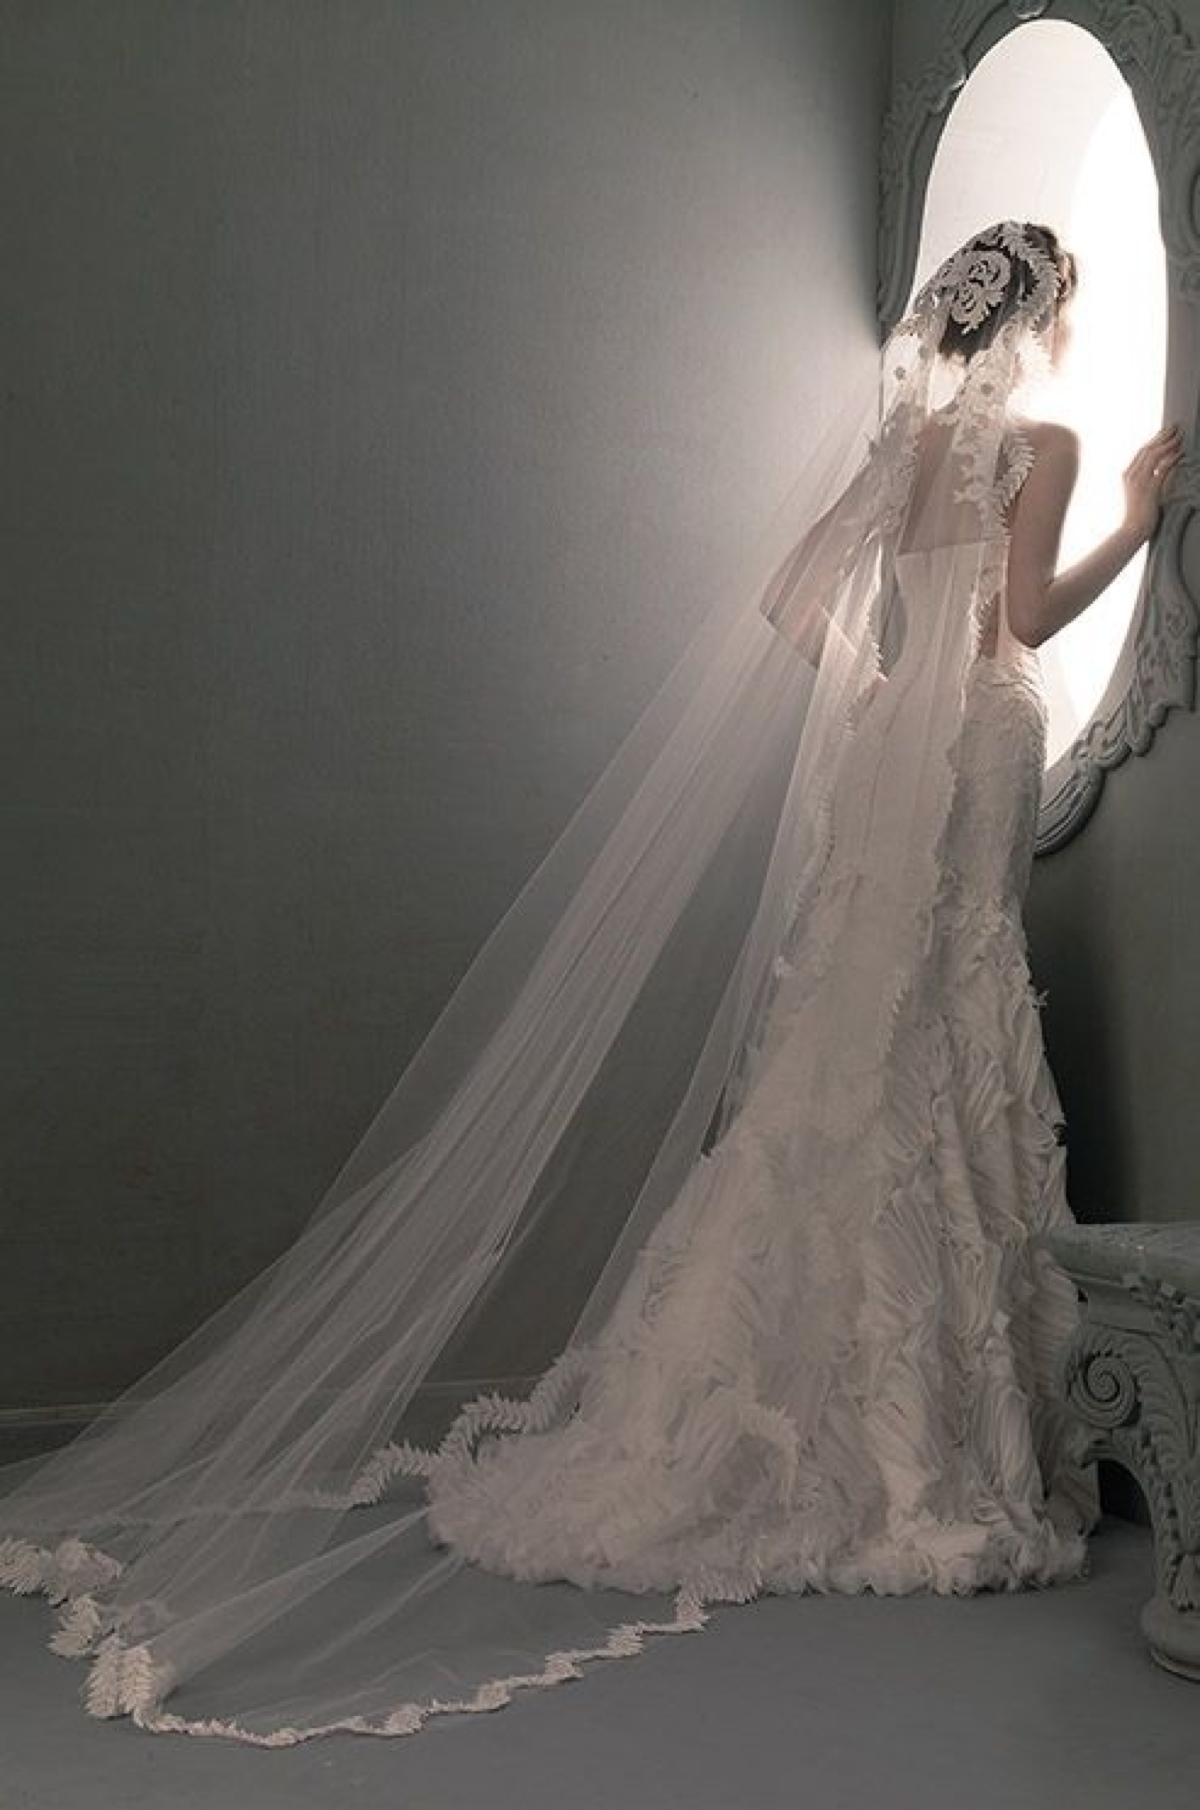 pucchi的婚纱设计风格却带着一股浓重的1200